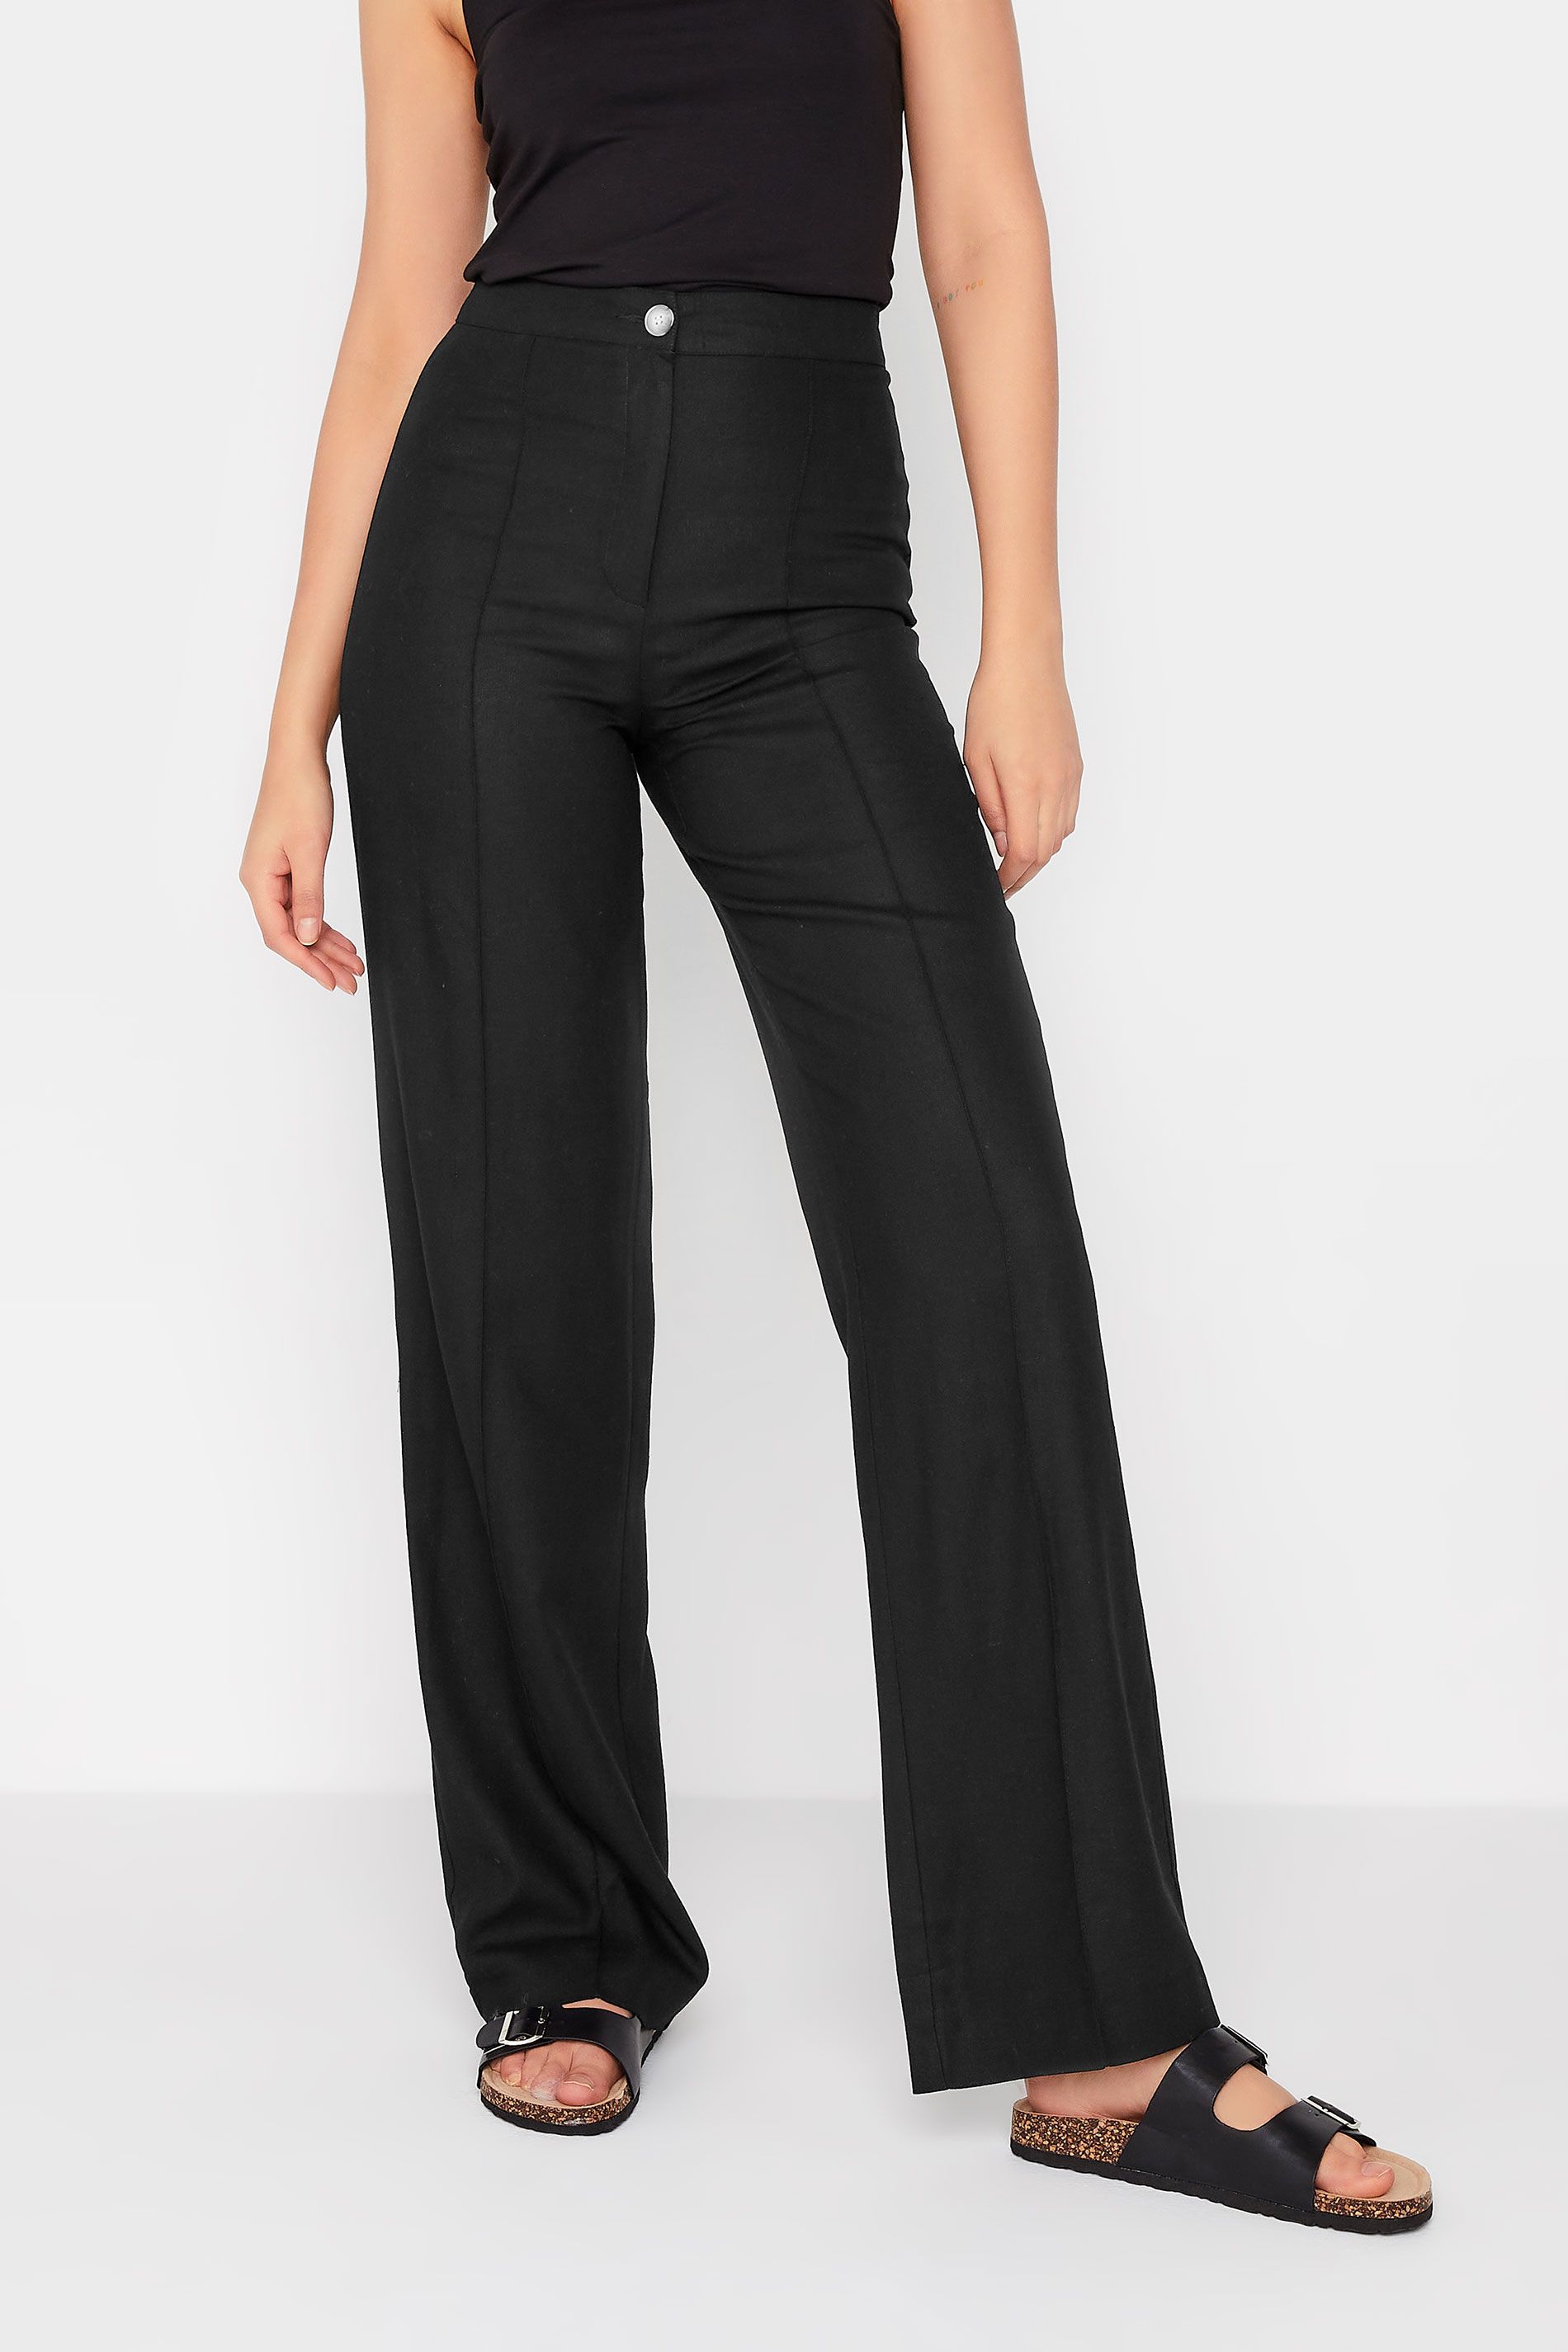 LTS Tall Black Linen Trousers | Long Tall Sally